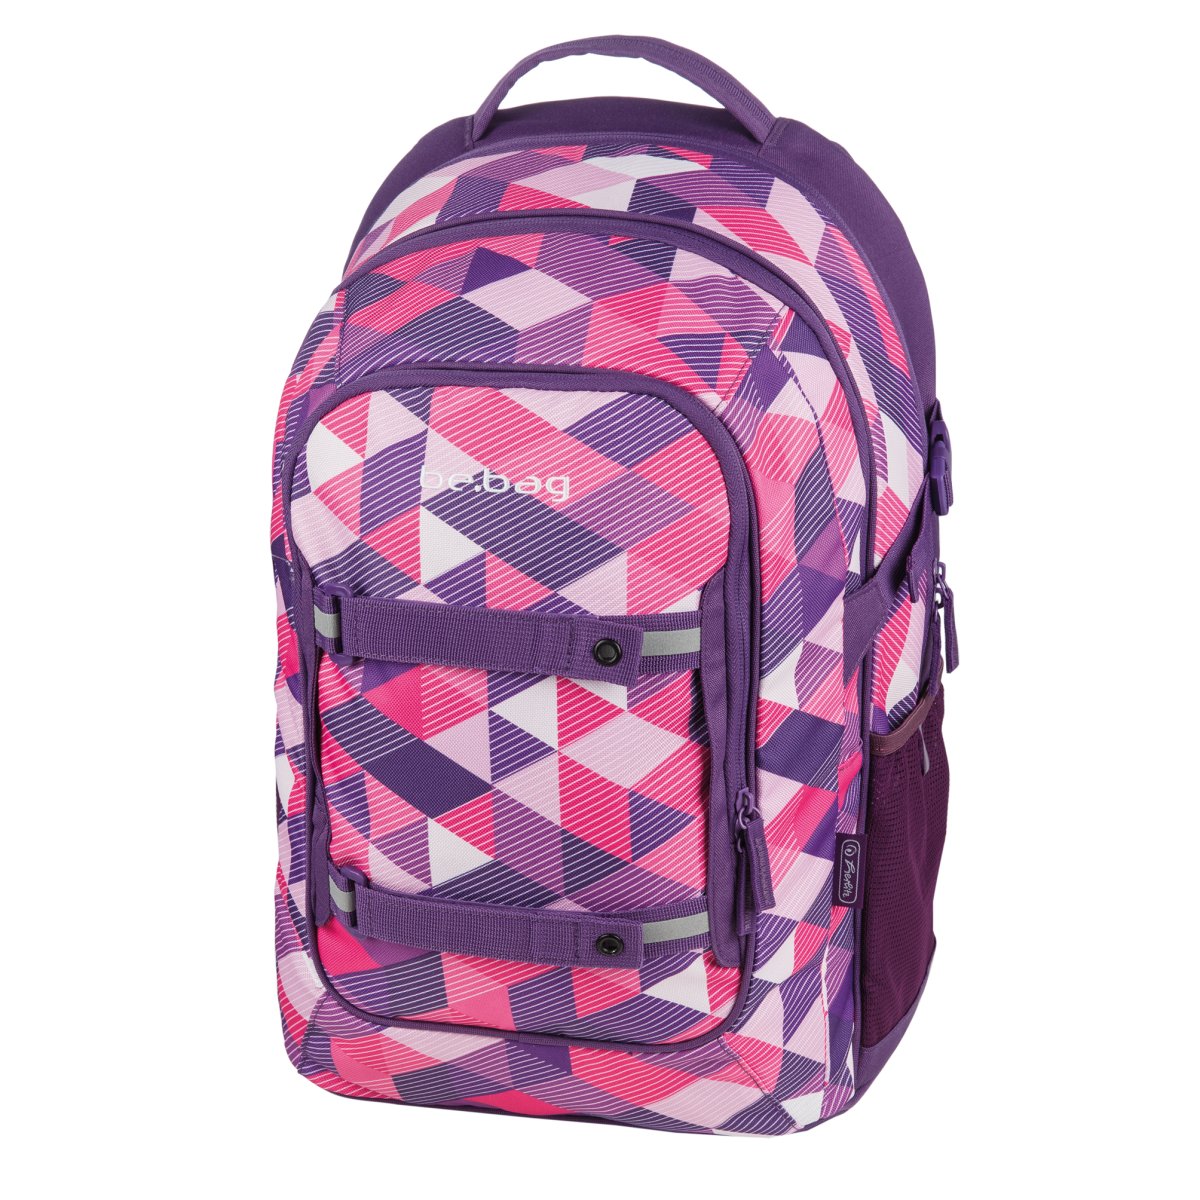 - beat Checked Purple school Herlitz be.bag backpack